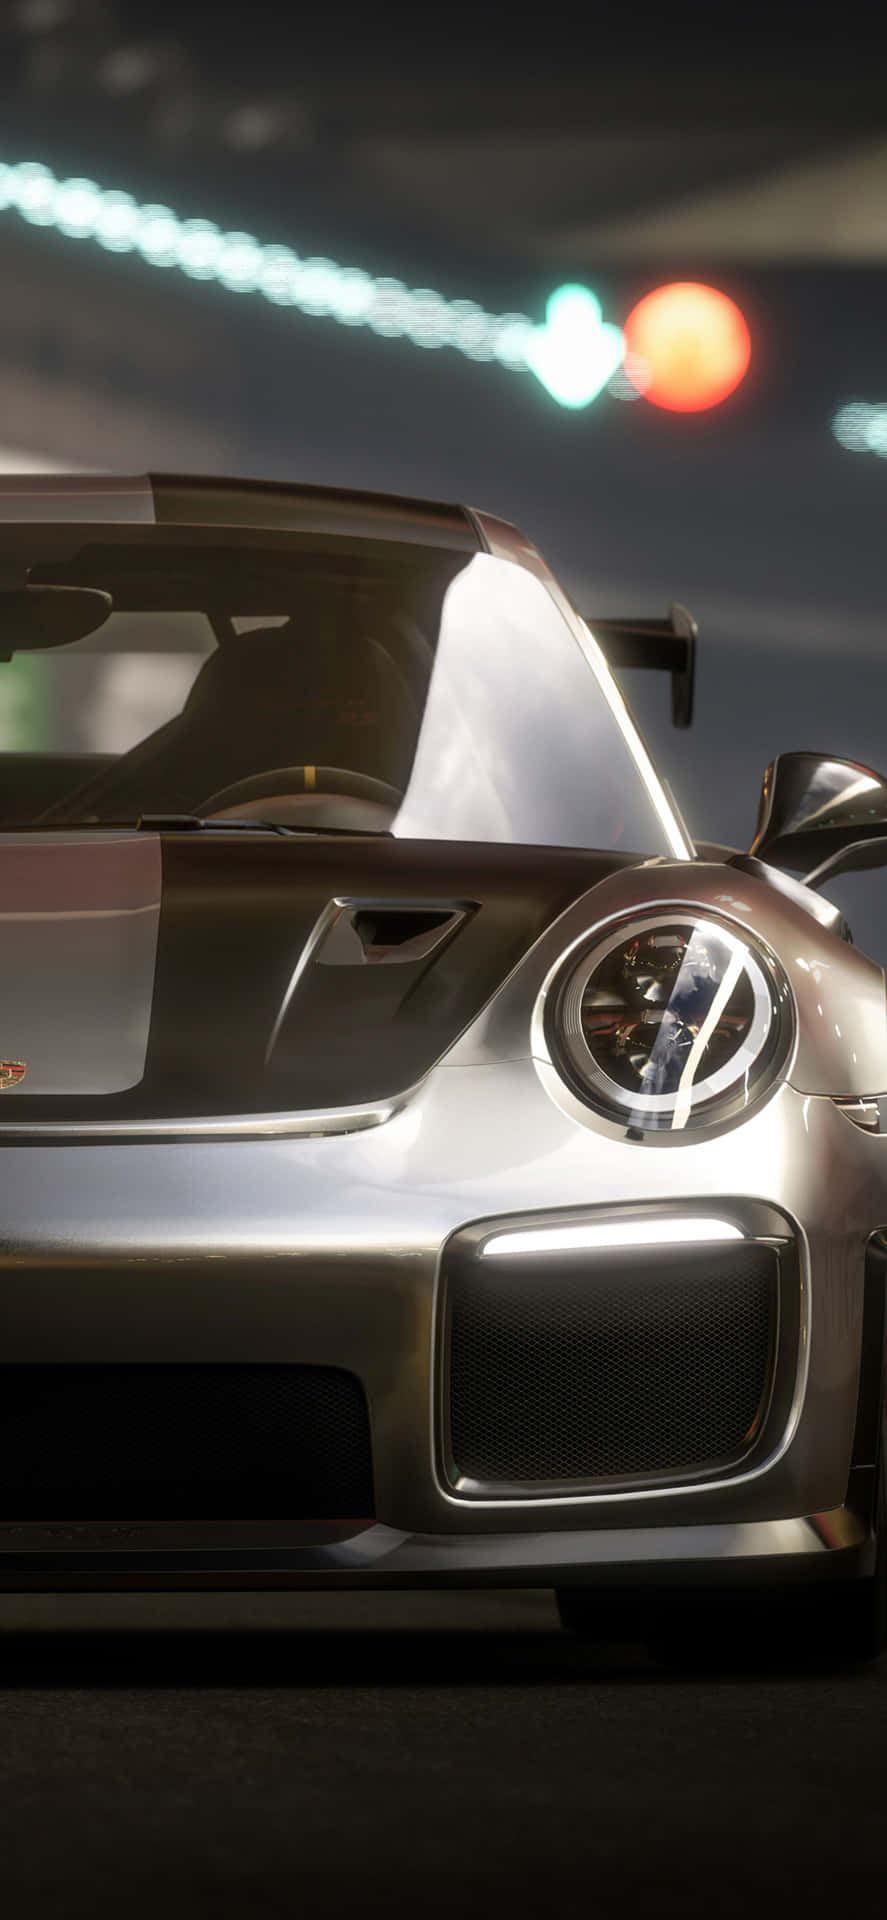 Iphonex Porcshe 911 Forza Motorsport 7 Hintergrund